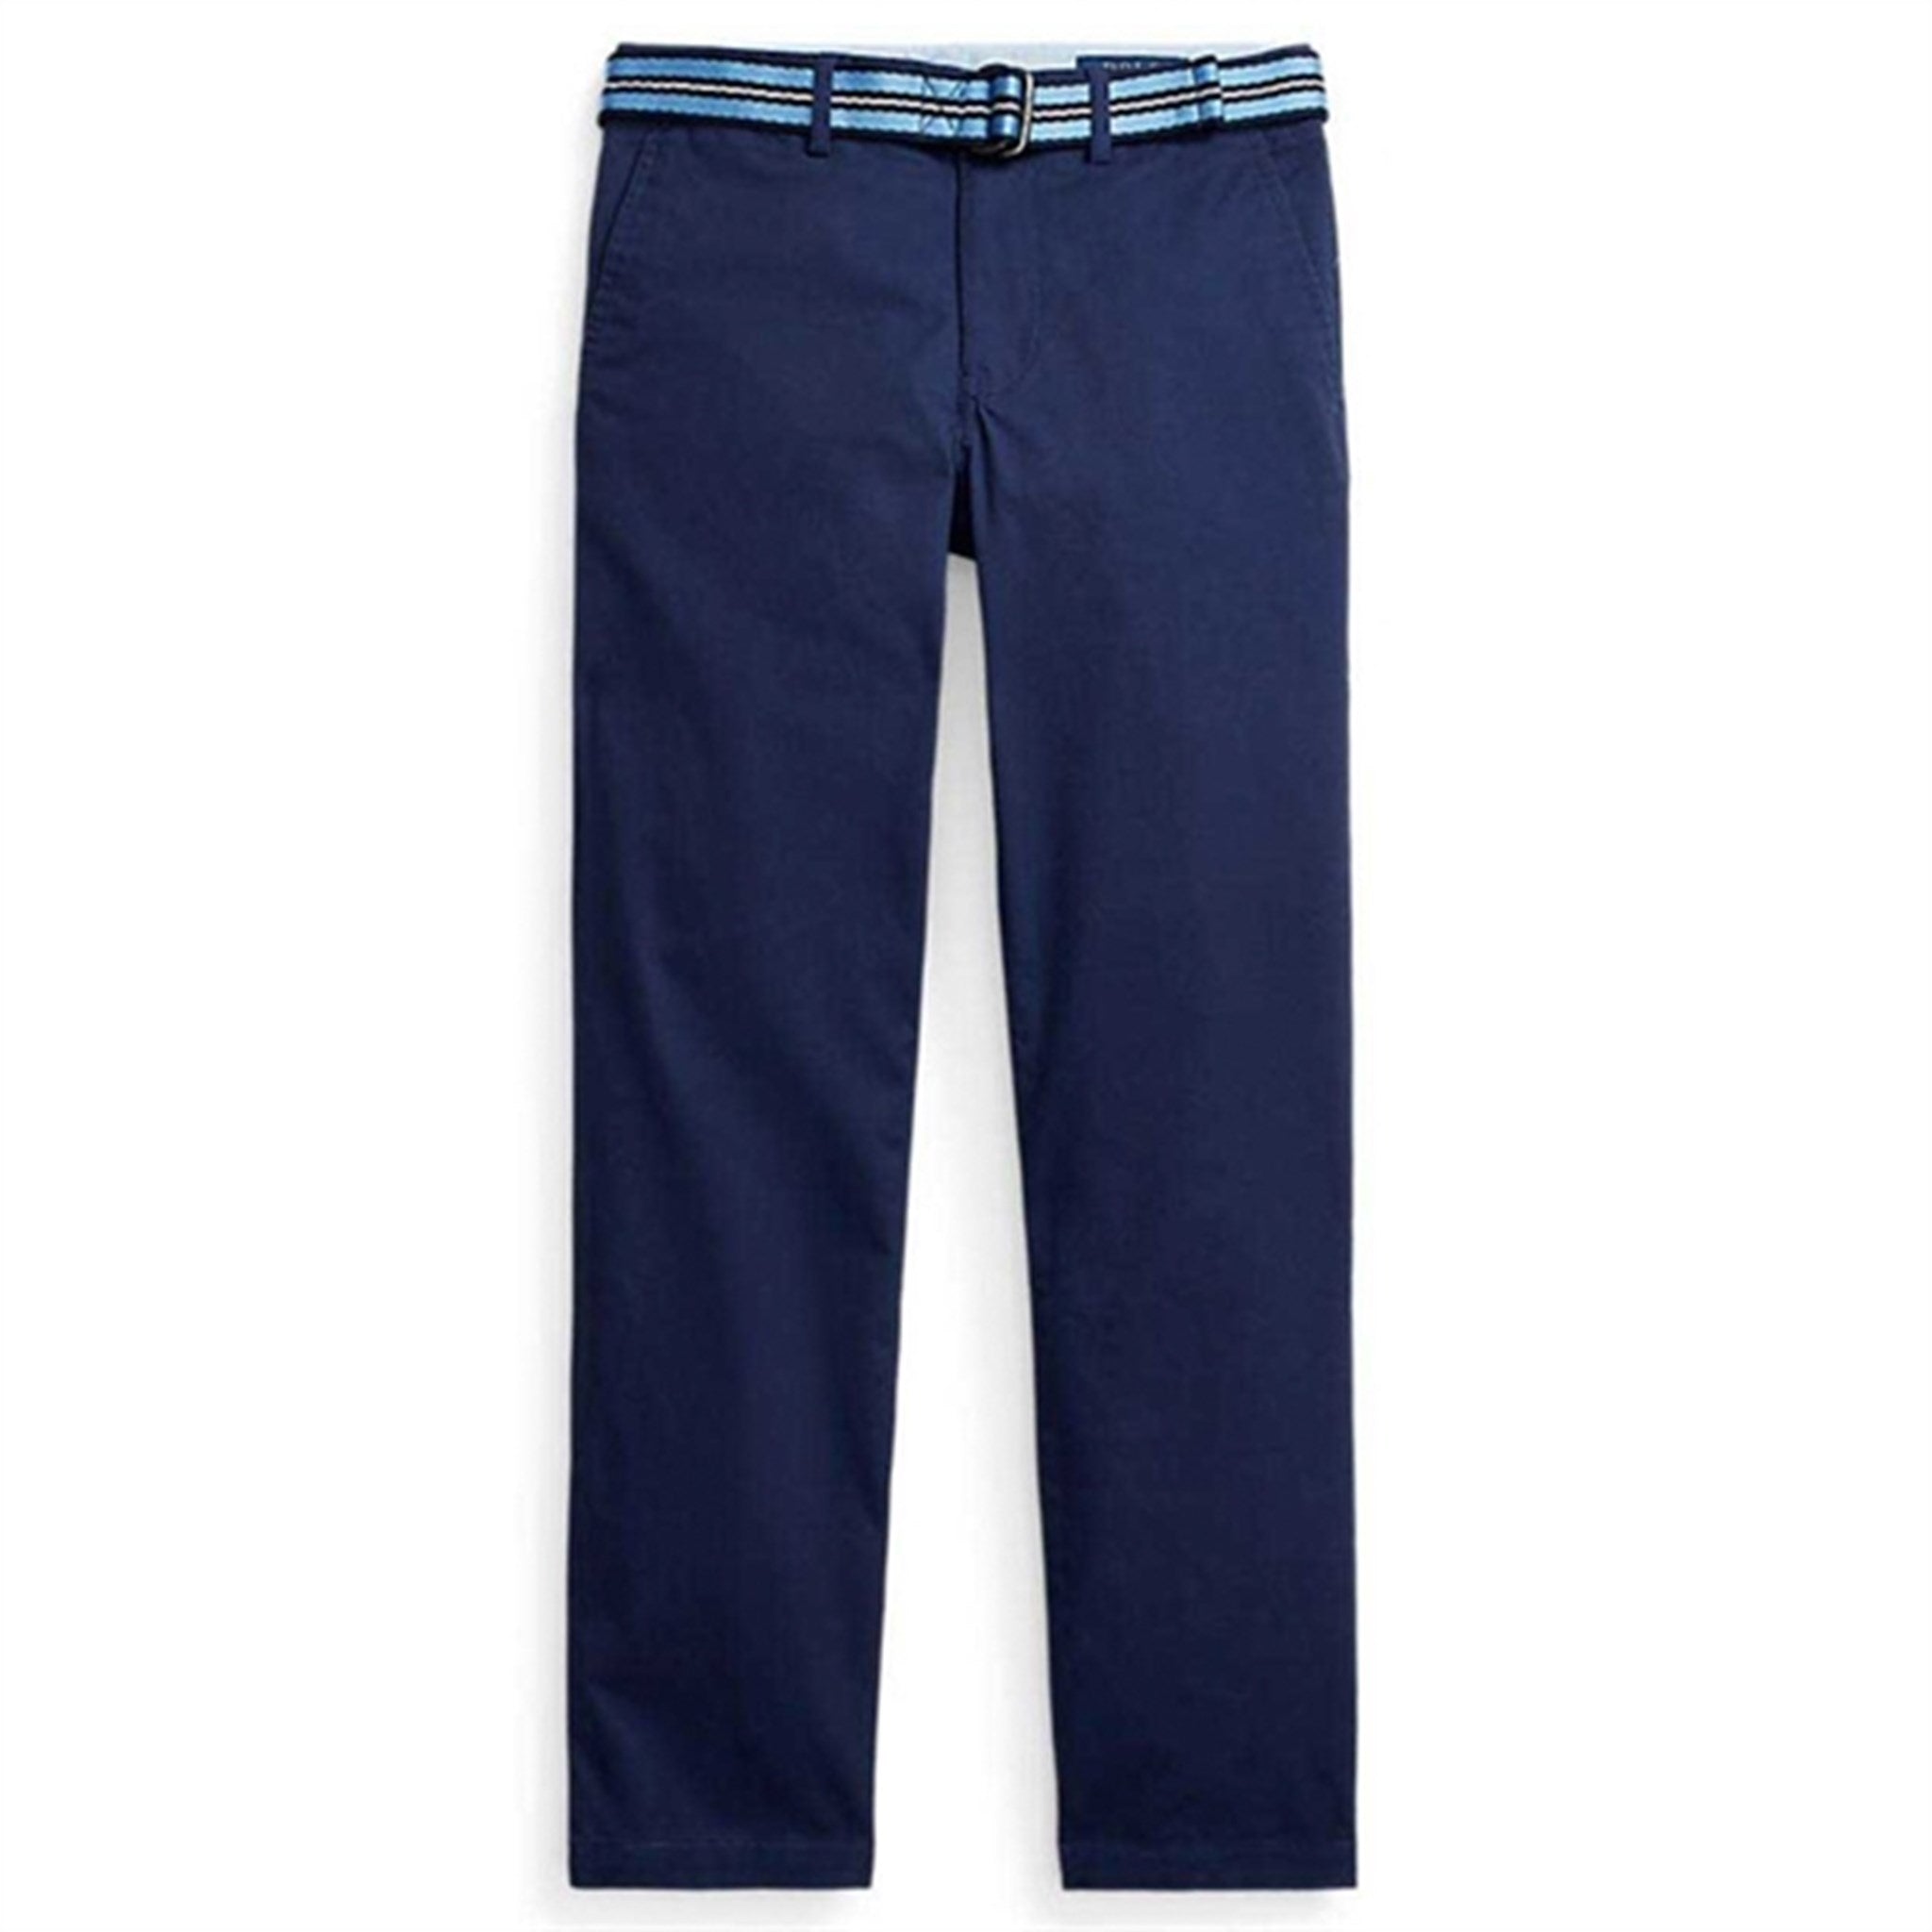 Polo Ralph Lauren Boy Twill Pants Newport Navy